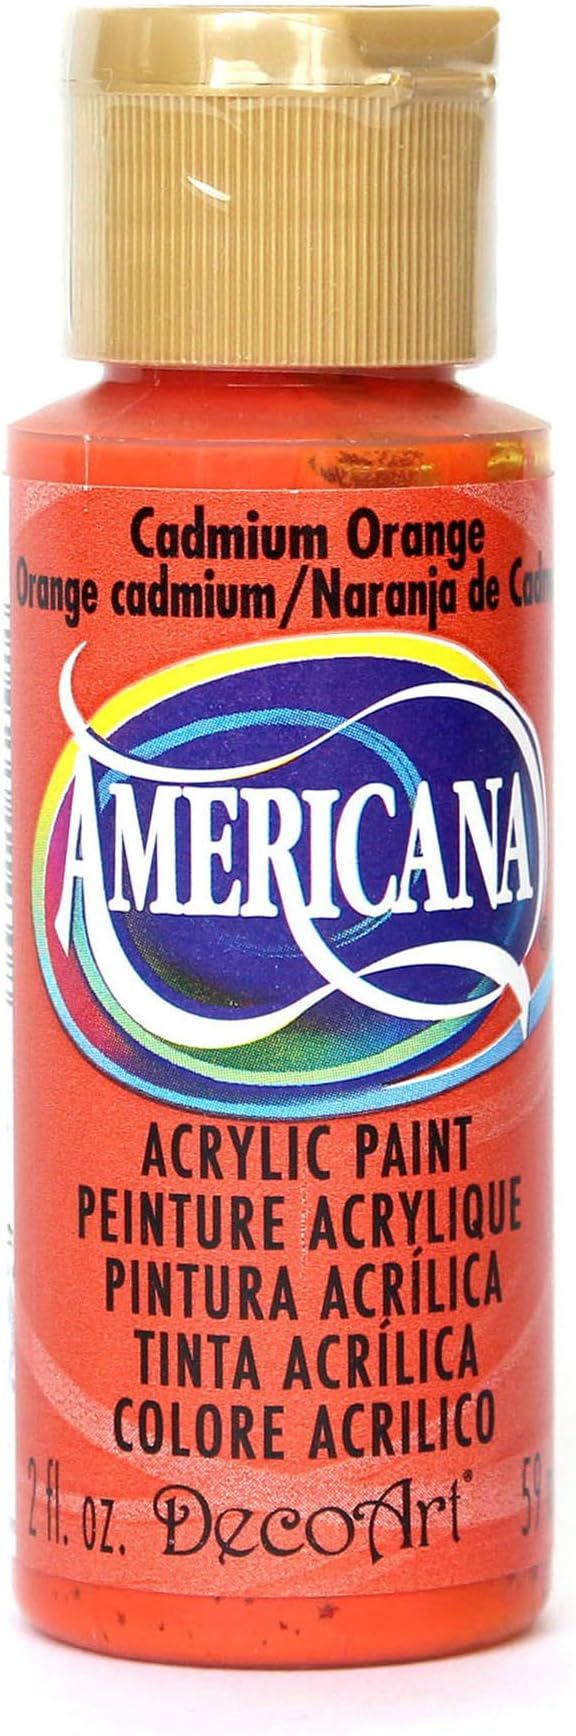 DecoArt Americana Acrylic Paint, 2-Ounce, Cadmium Orange | Amazon (US)